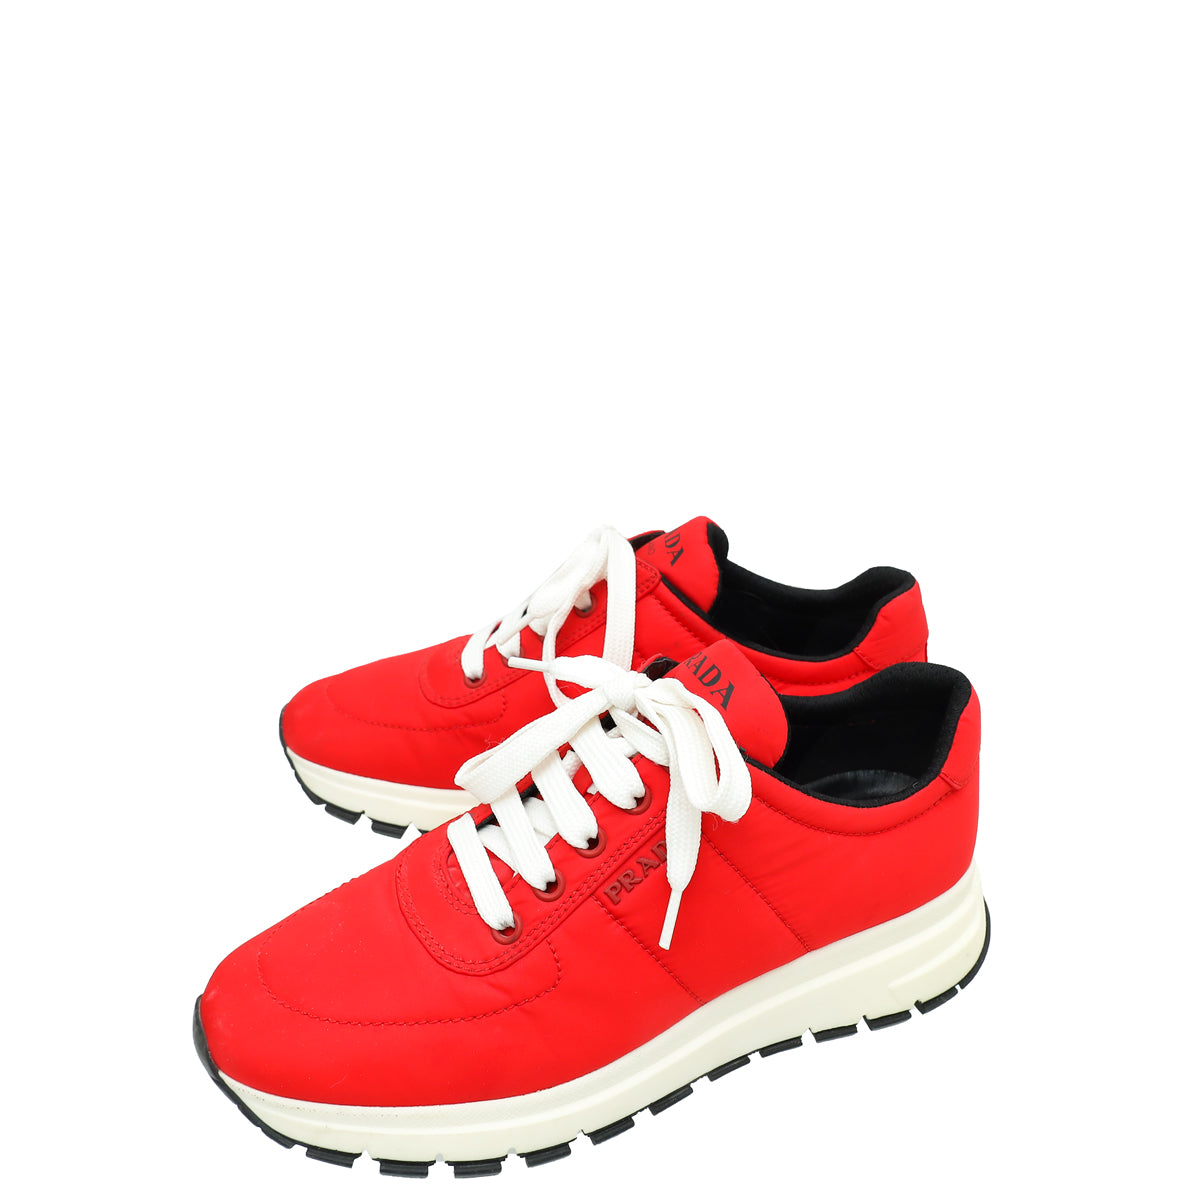 Prada Red Logo Nylon Lace Up Sneaker 37